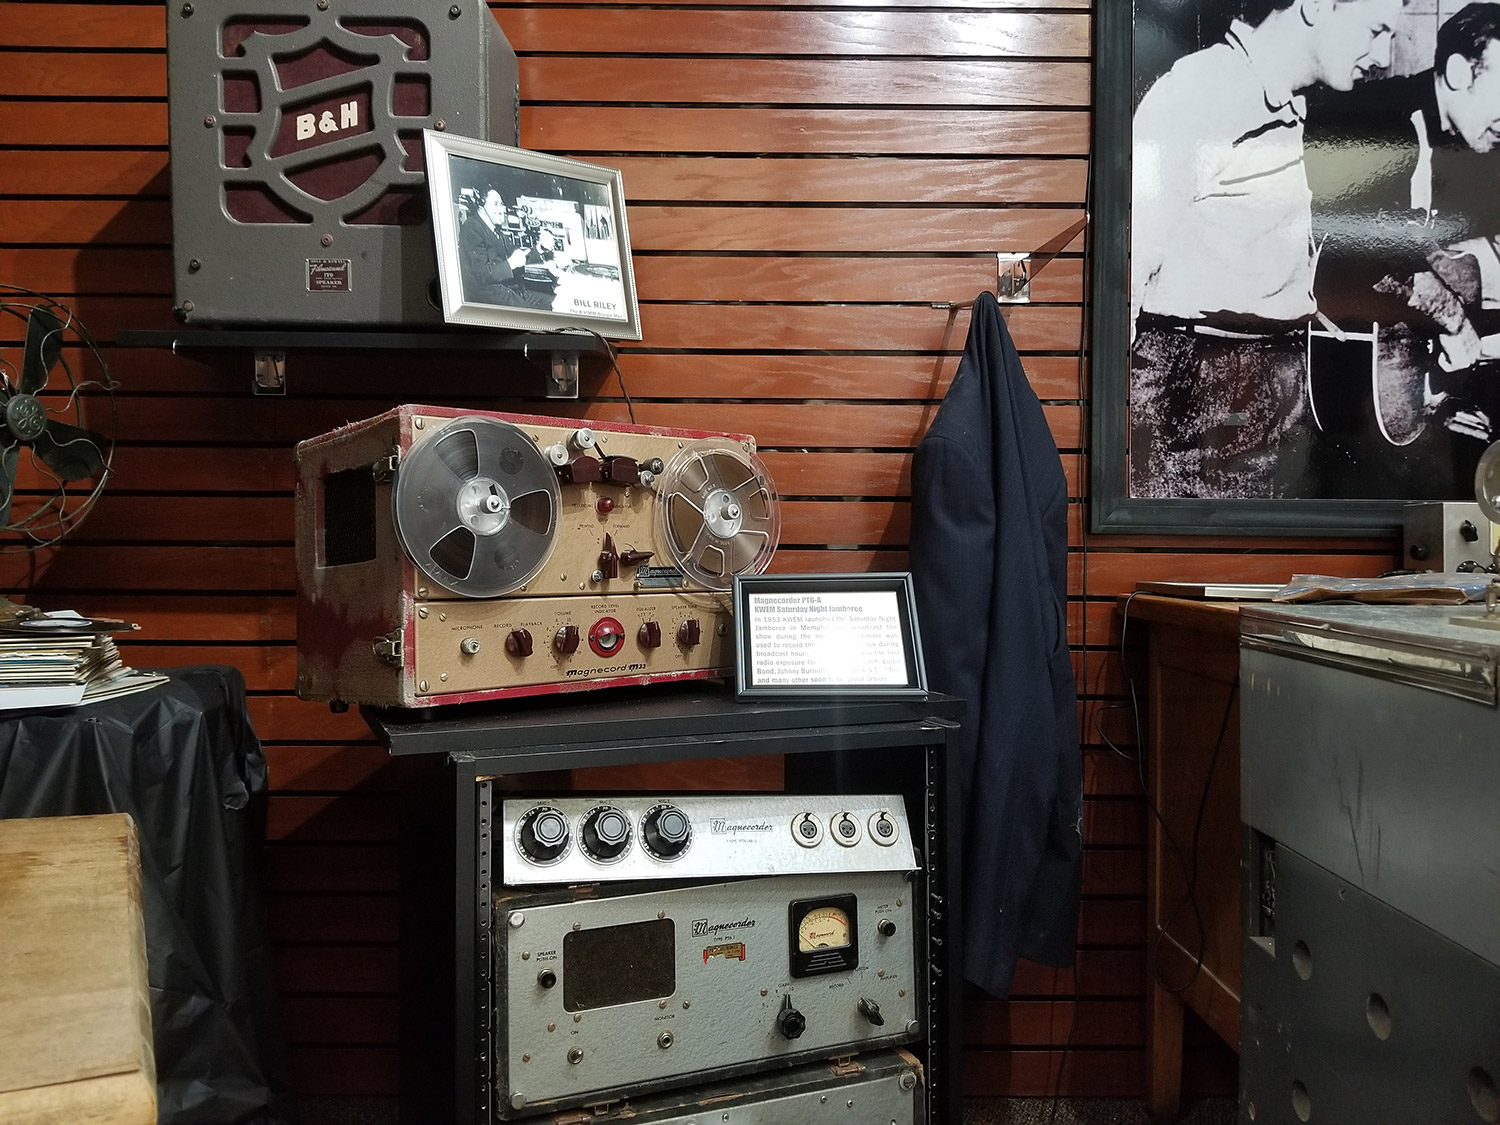 radio station broadcasting equipment and photos on display